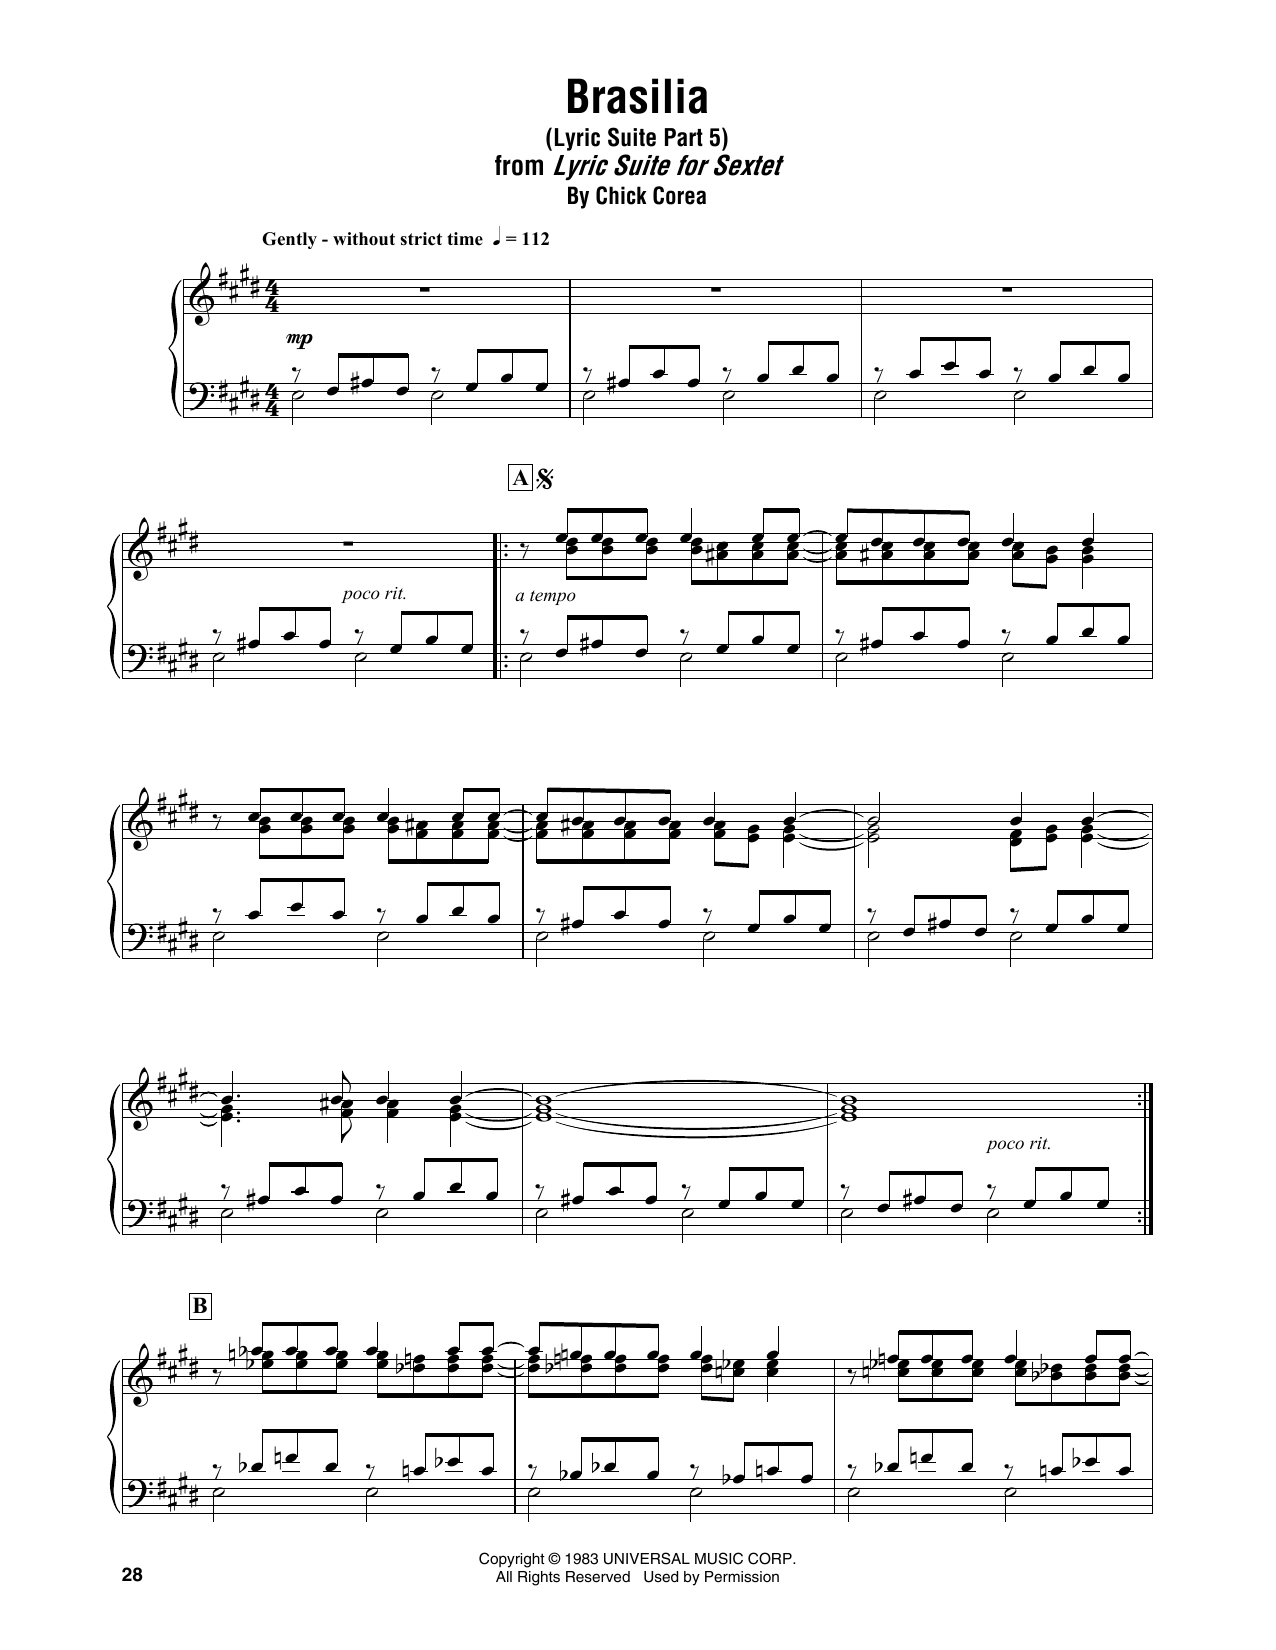 Chick Corea Brasilia (Lyric Suite Part 5) Sheet Music Notes & Chords for Piano Transcription - Download or Print PDF